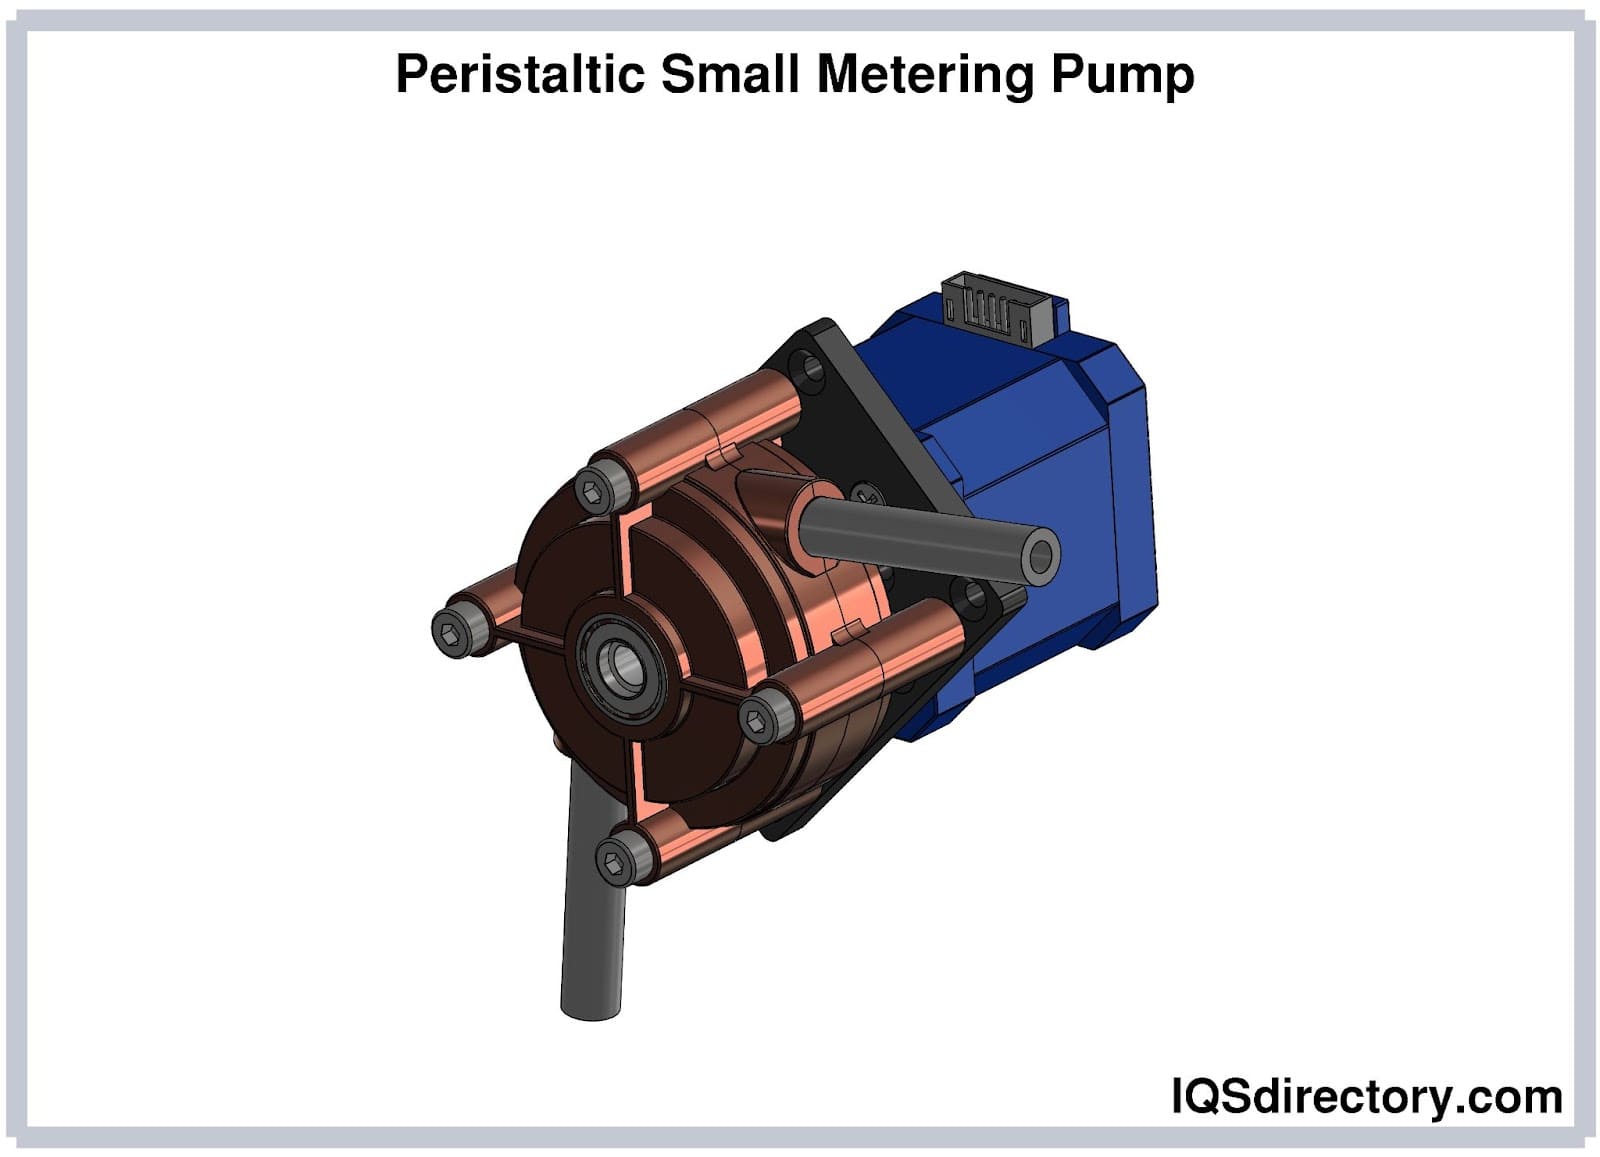 Peristaltic Small Metering Pump